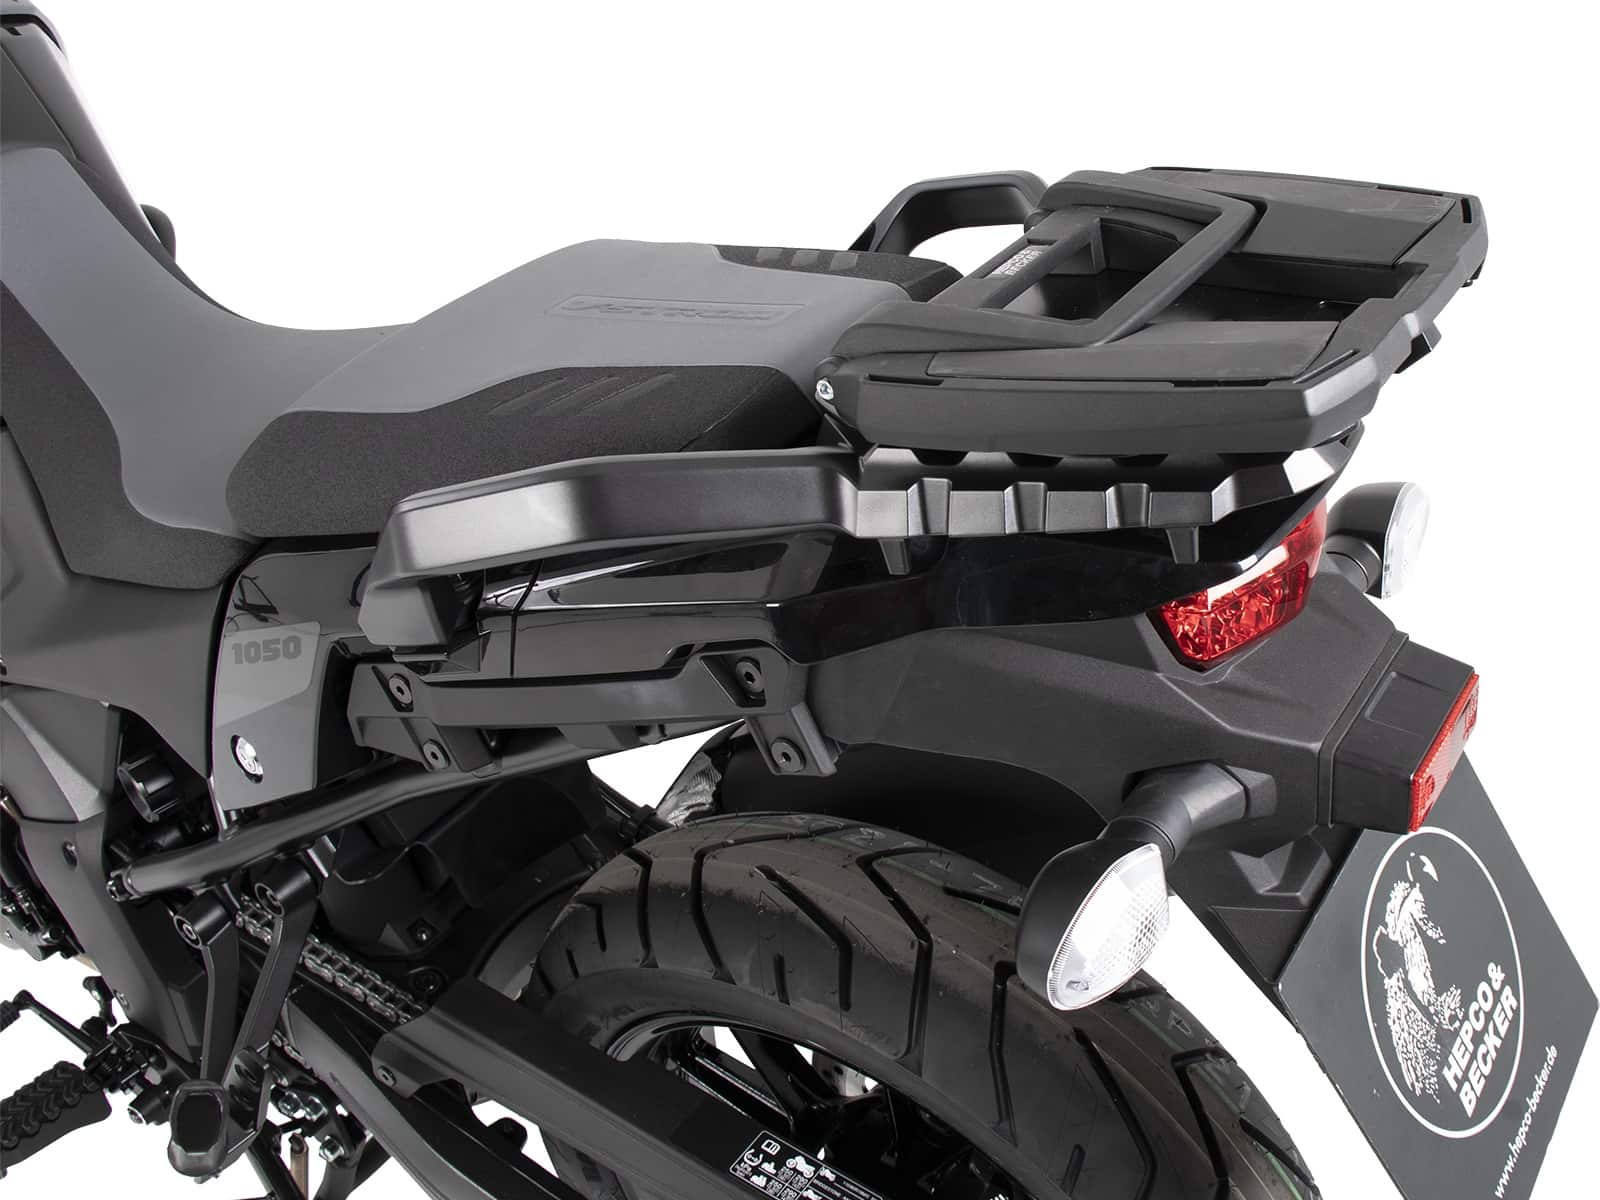 Easyrack topcasecarrier black for combination with original rear rack for Suzuki V-Strom 1050 / XT (2020-2022)